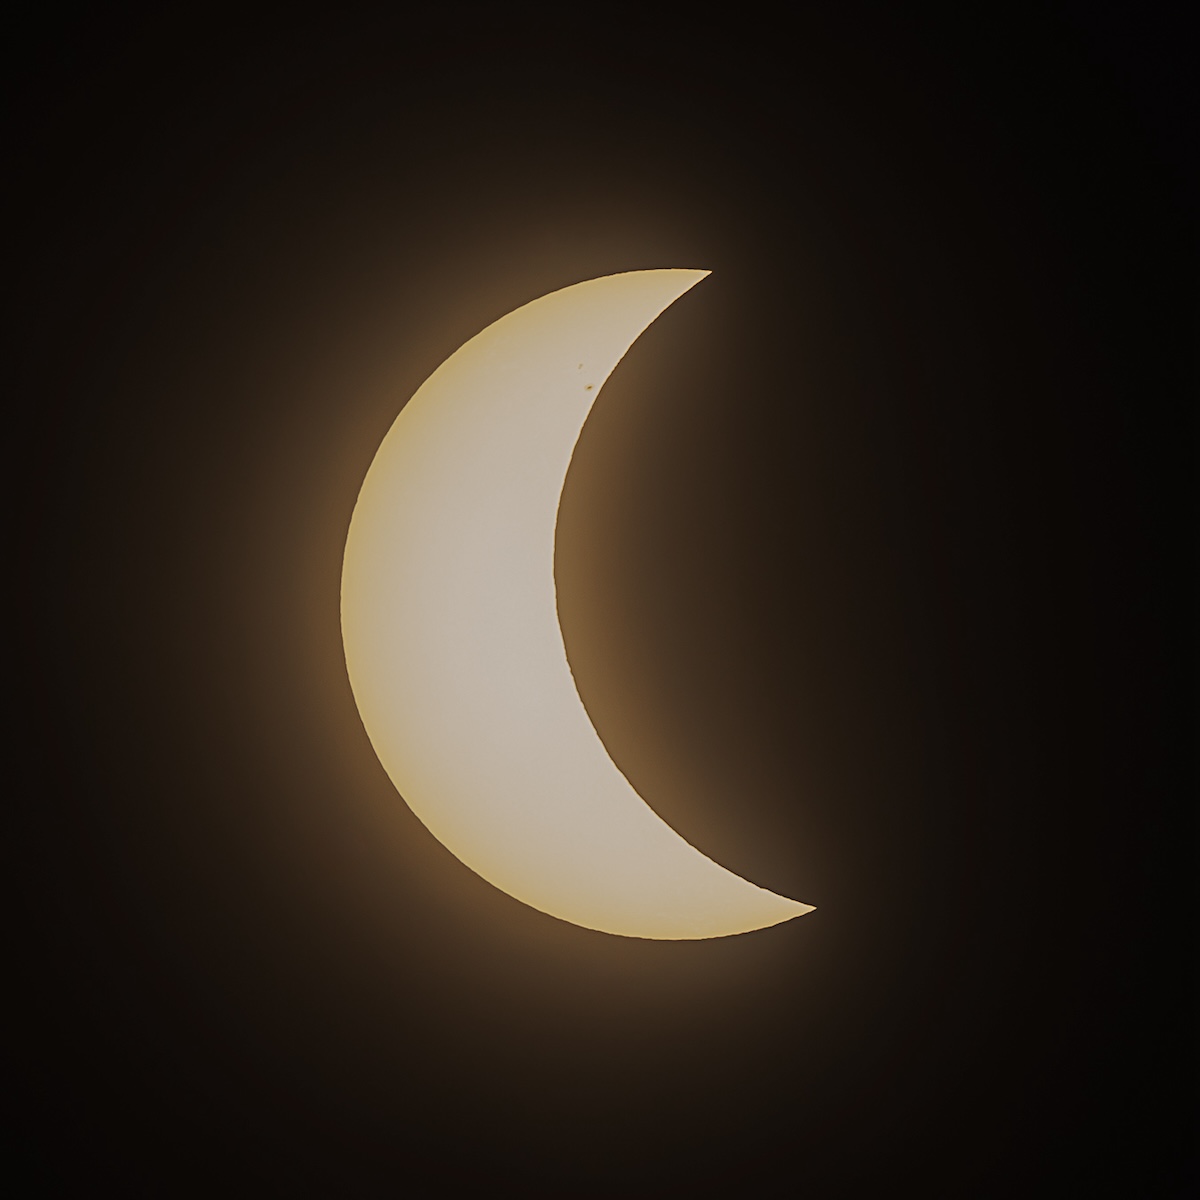 Solar eclipse captured in Ocala